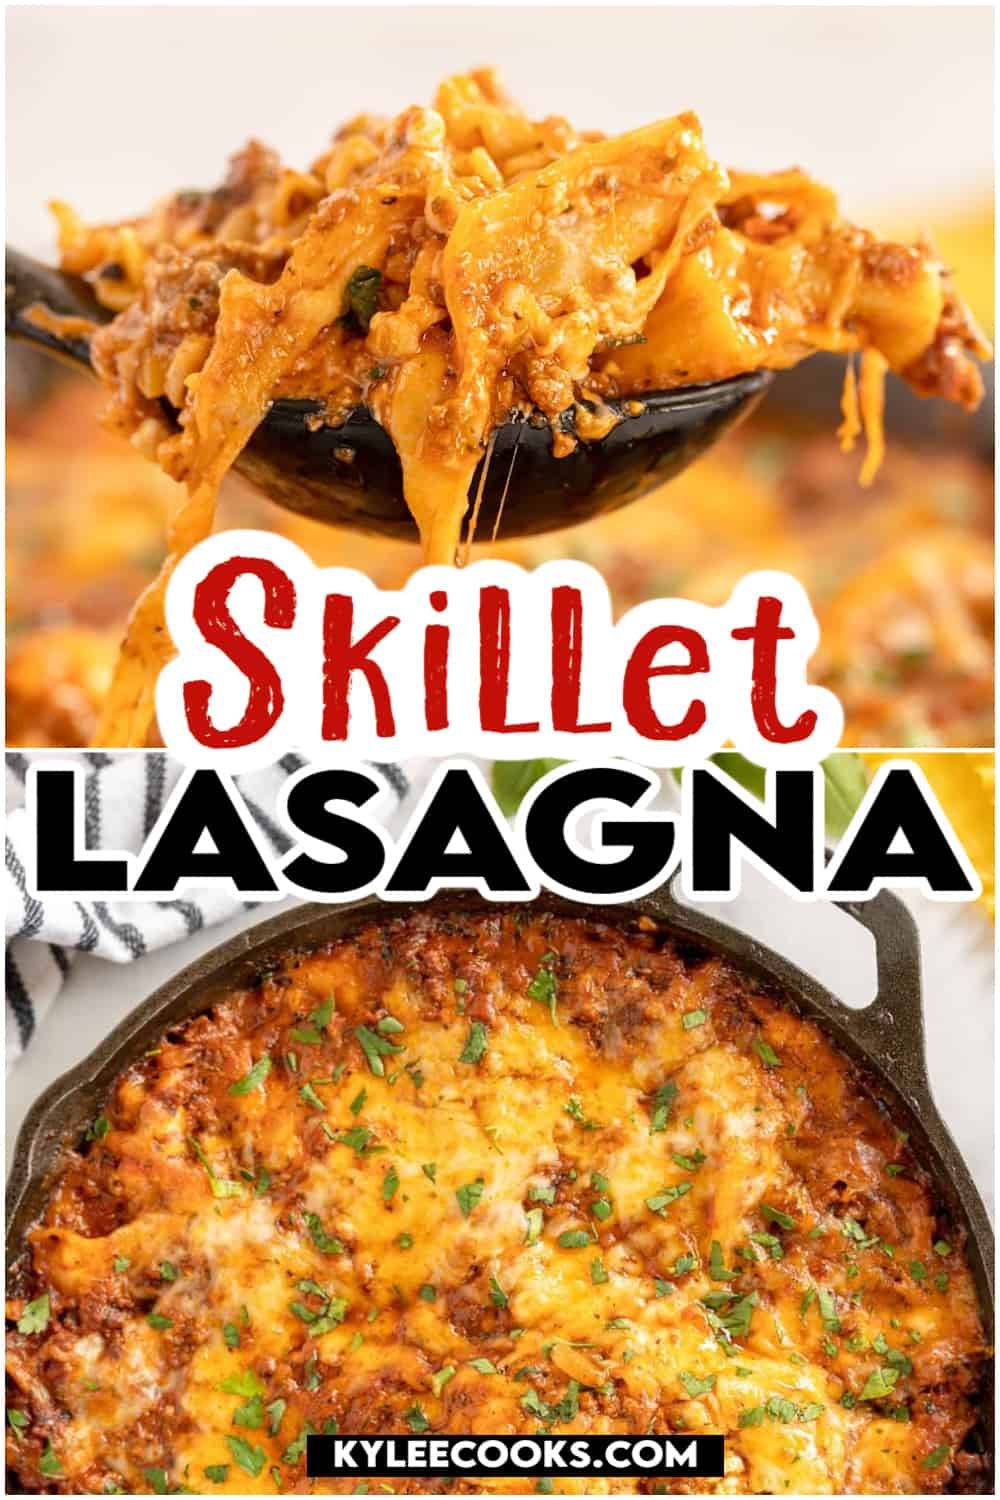 spoon full of lasagna, skillet of lasagna and recipe name "skillet lasagna" overlaid in text.